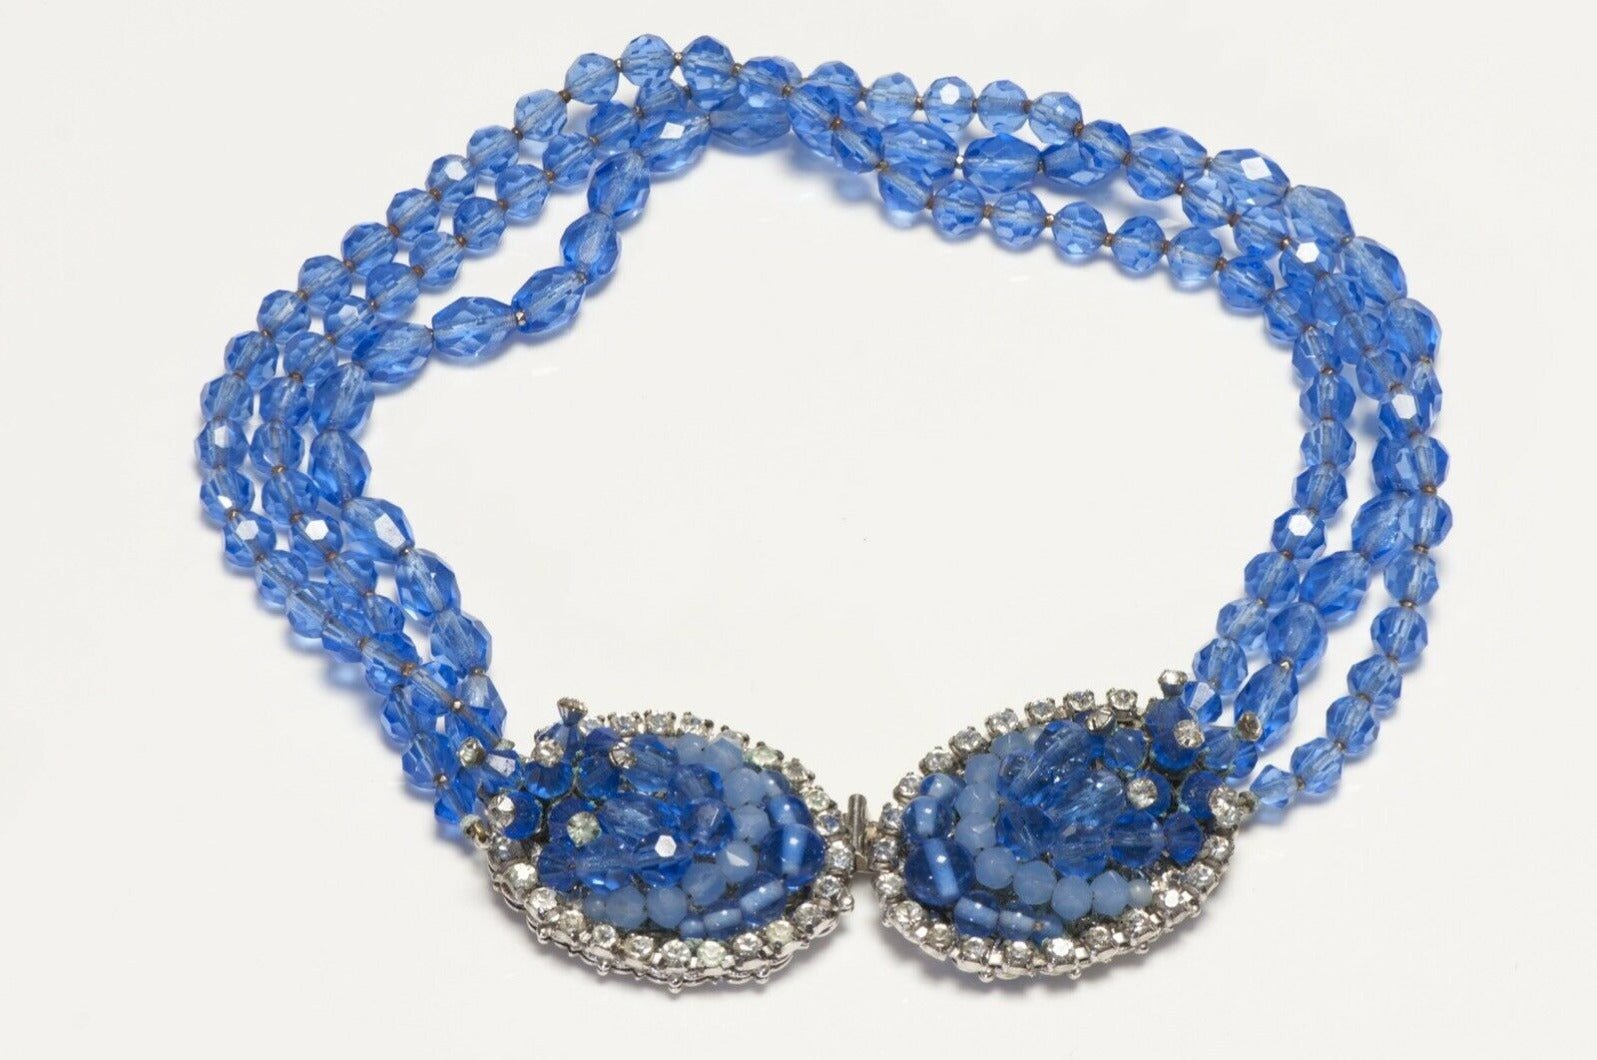 Vintage 1950’s Eugene Blue Crystal Beads Flower Necklace Earrings Set